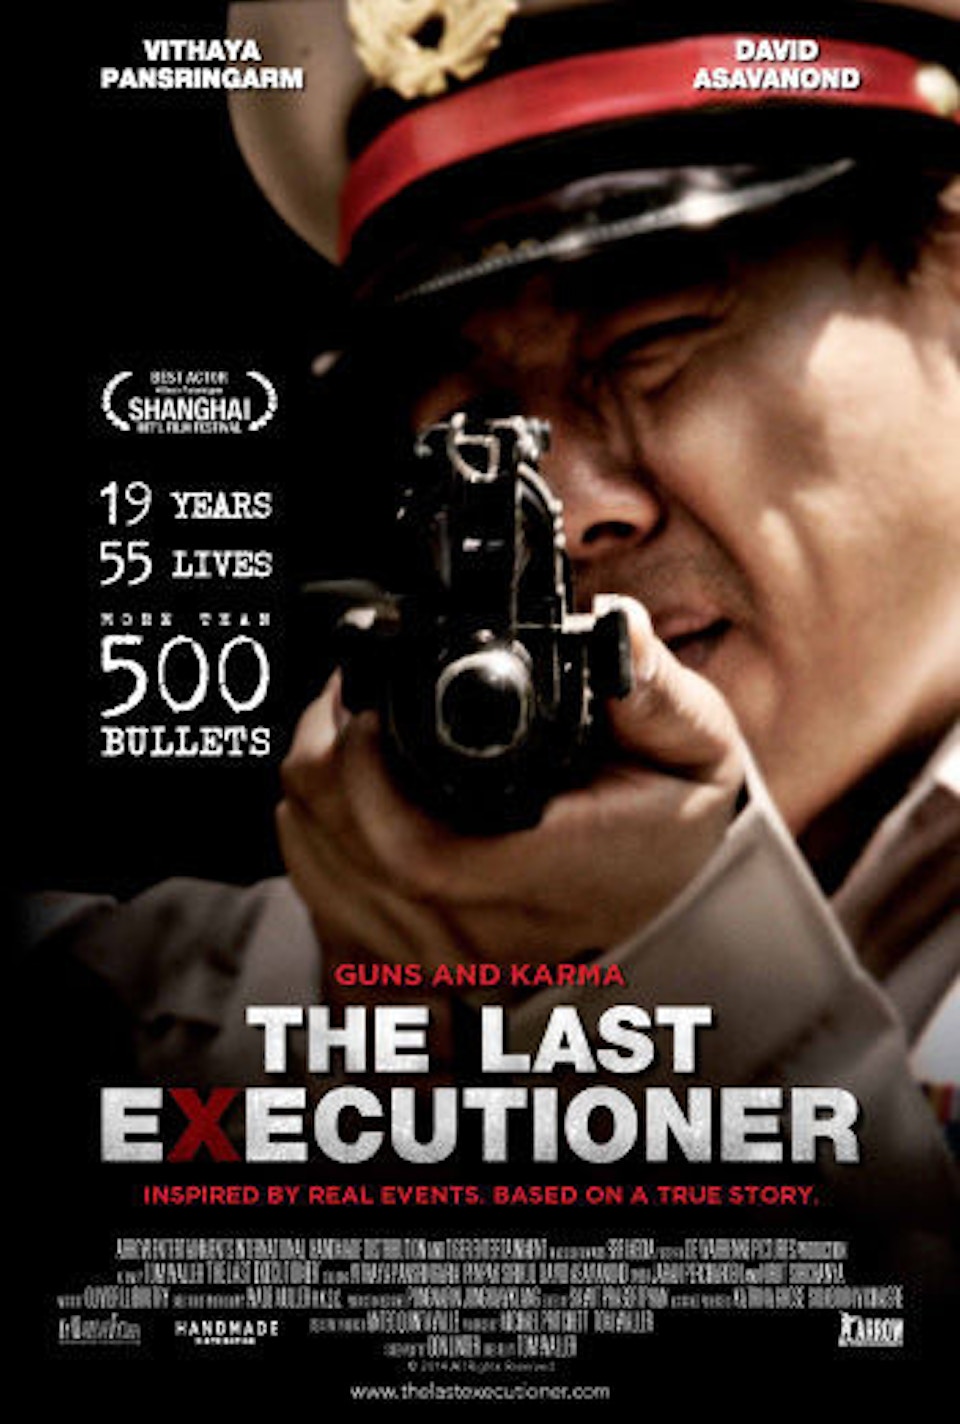 THE LAST EXECUTIONER trailer